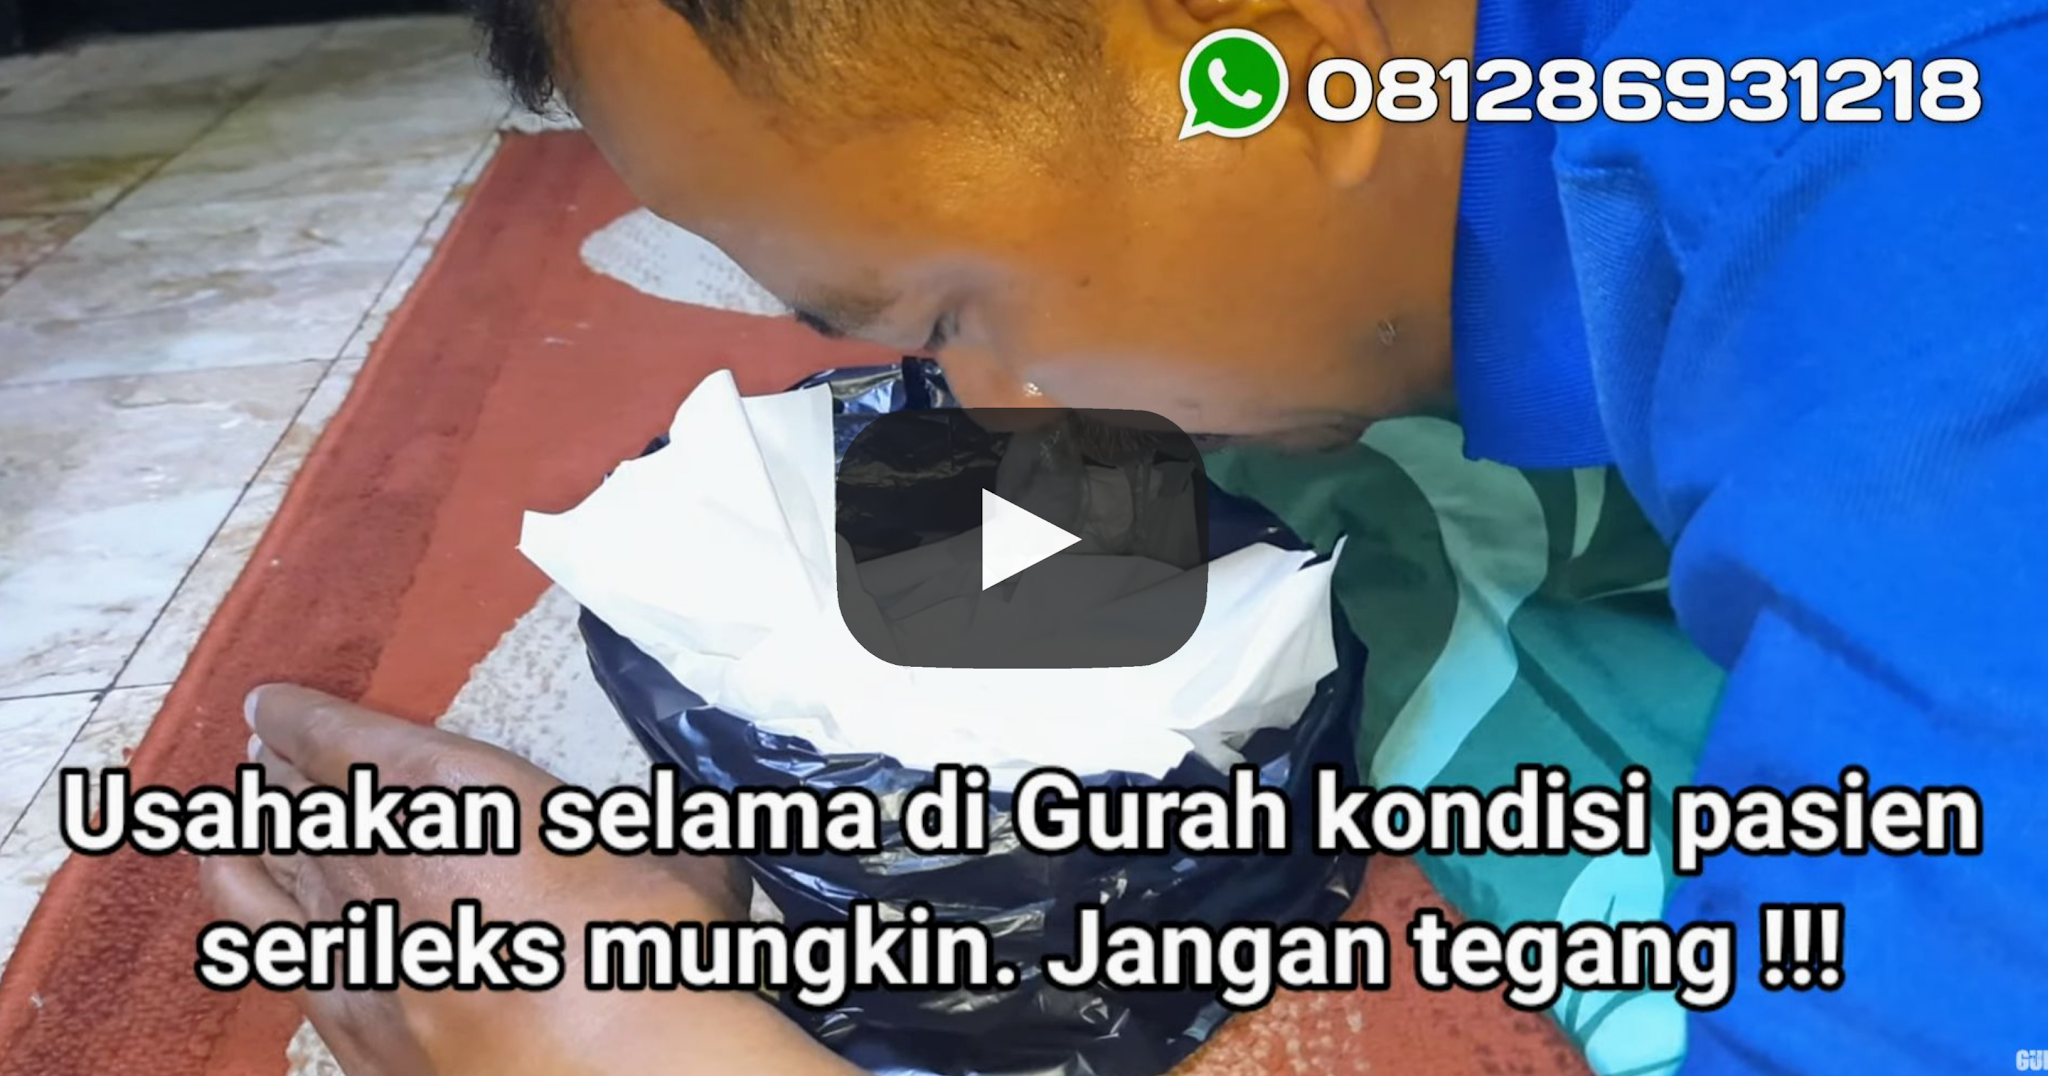 VIDEO YOUTUB TERAPI GURAH